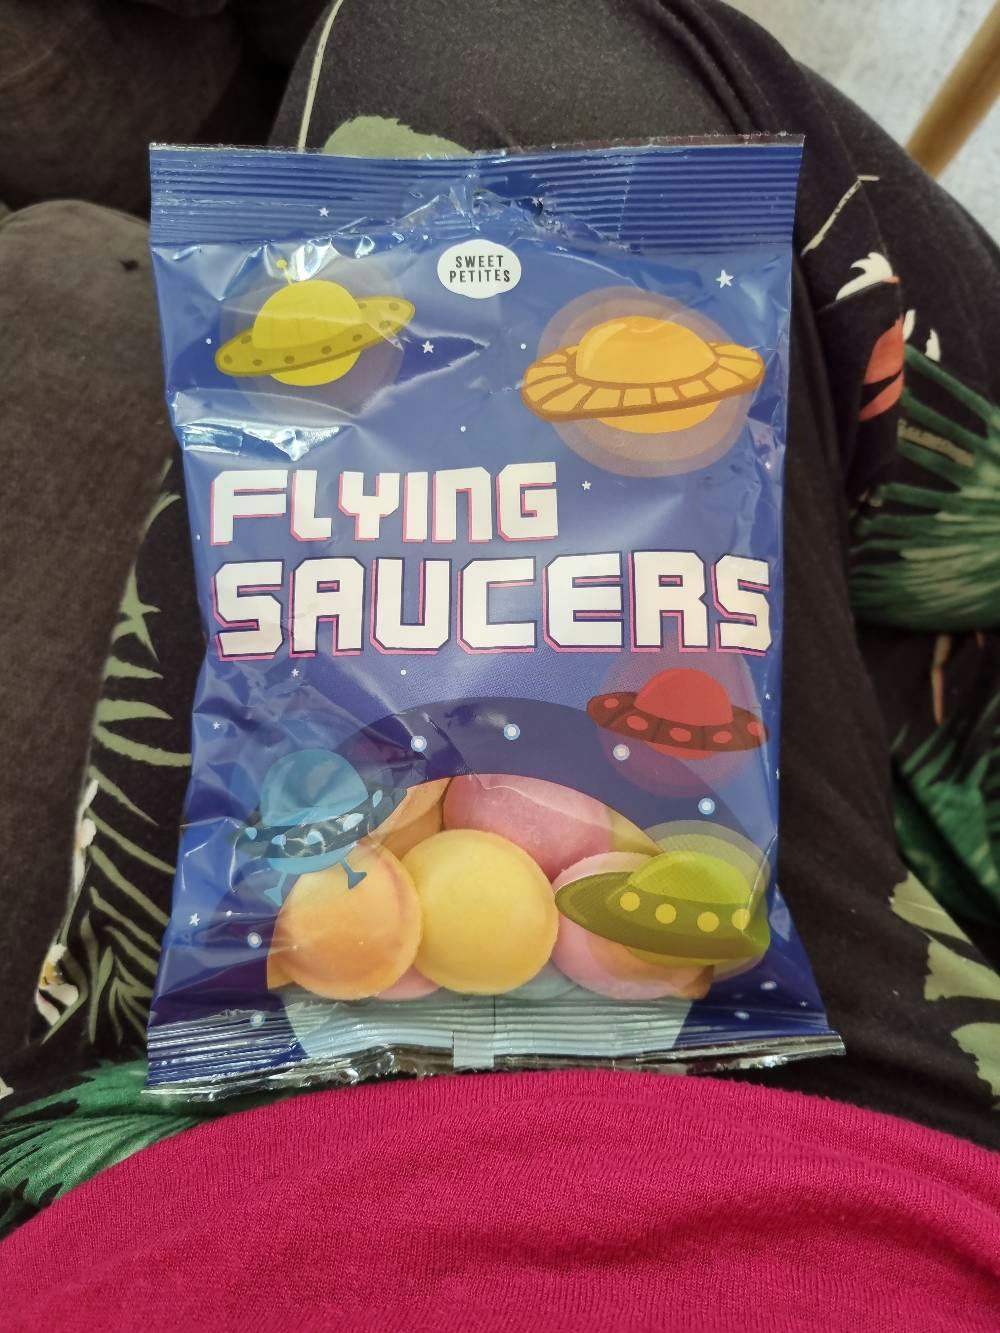 Flying saucers, Sweet petites